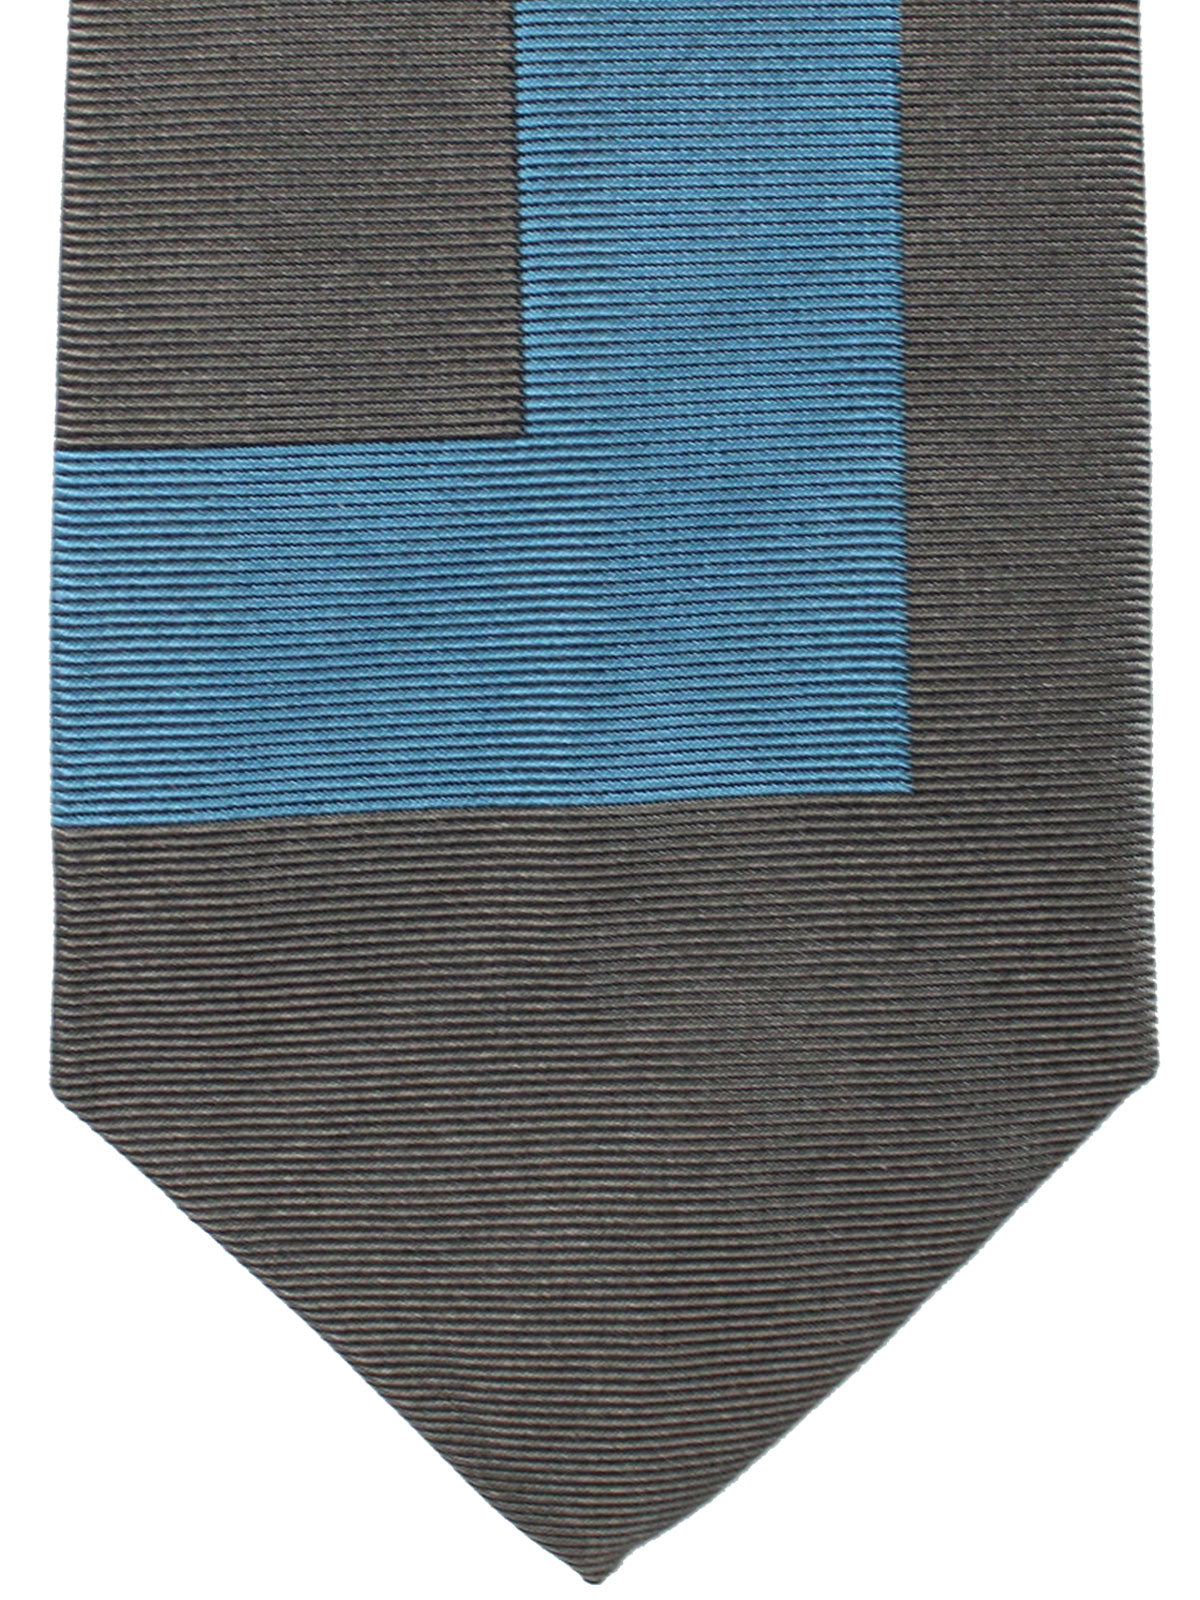 Gene Meyer Tie Metallic Gray Turquoise Stripe Design - Hand Made in Italy